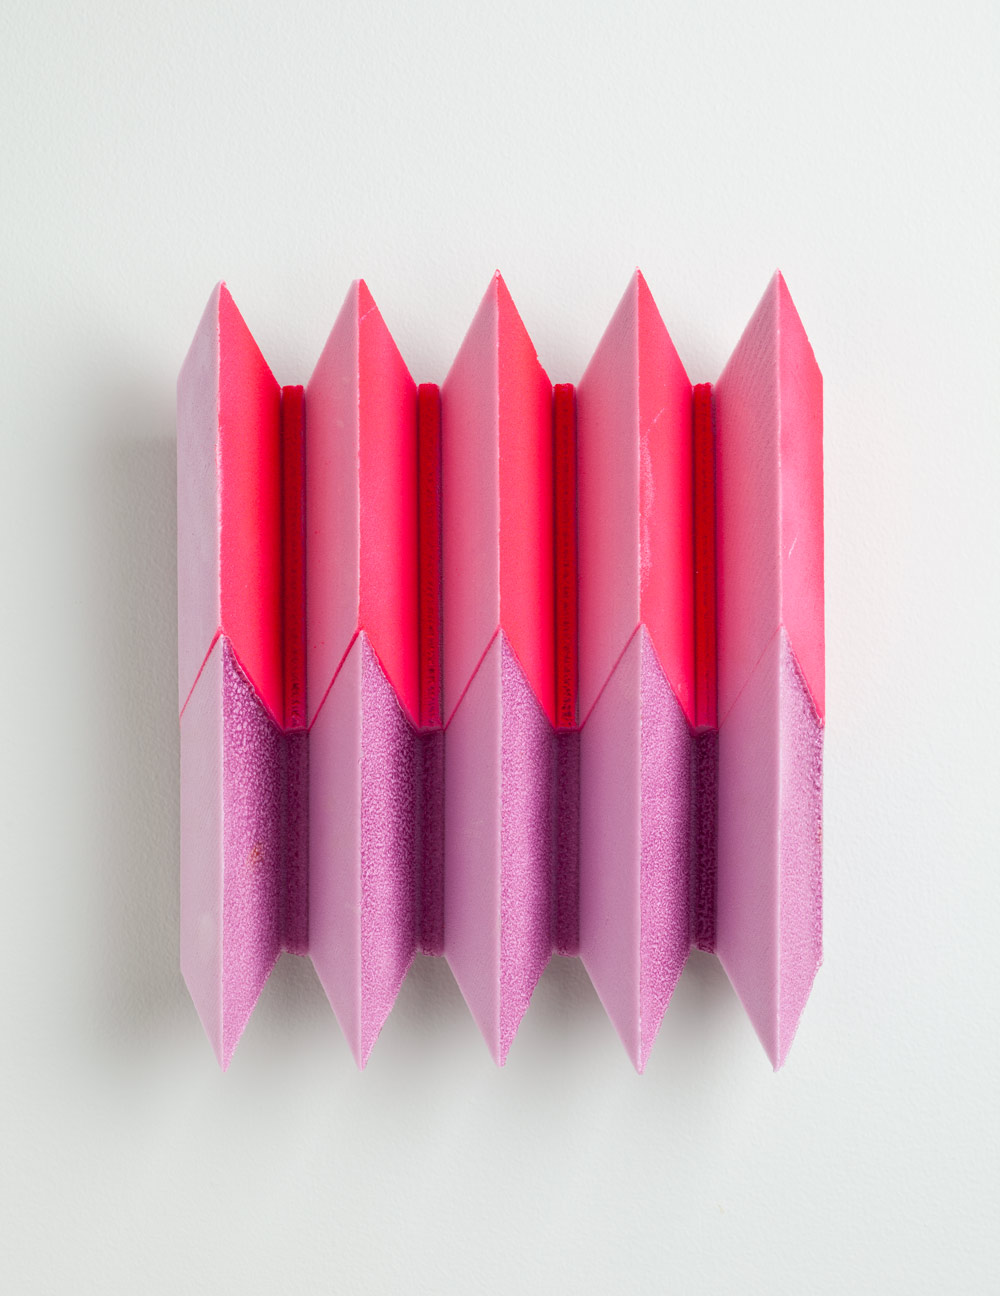 Devin Farrand - Untitled (Pink&Purple)